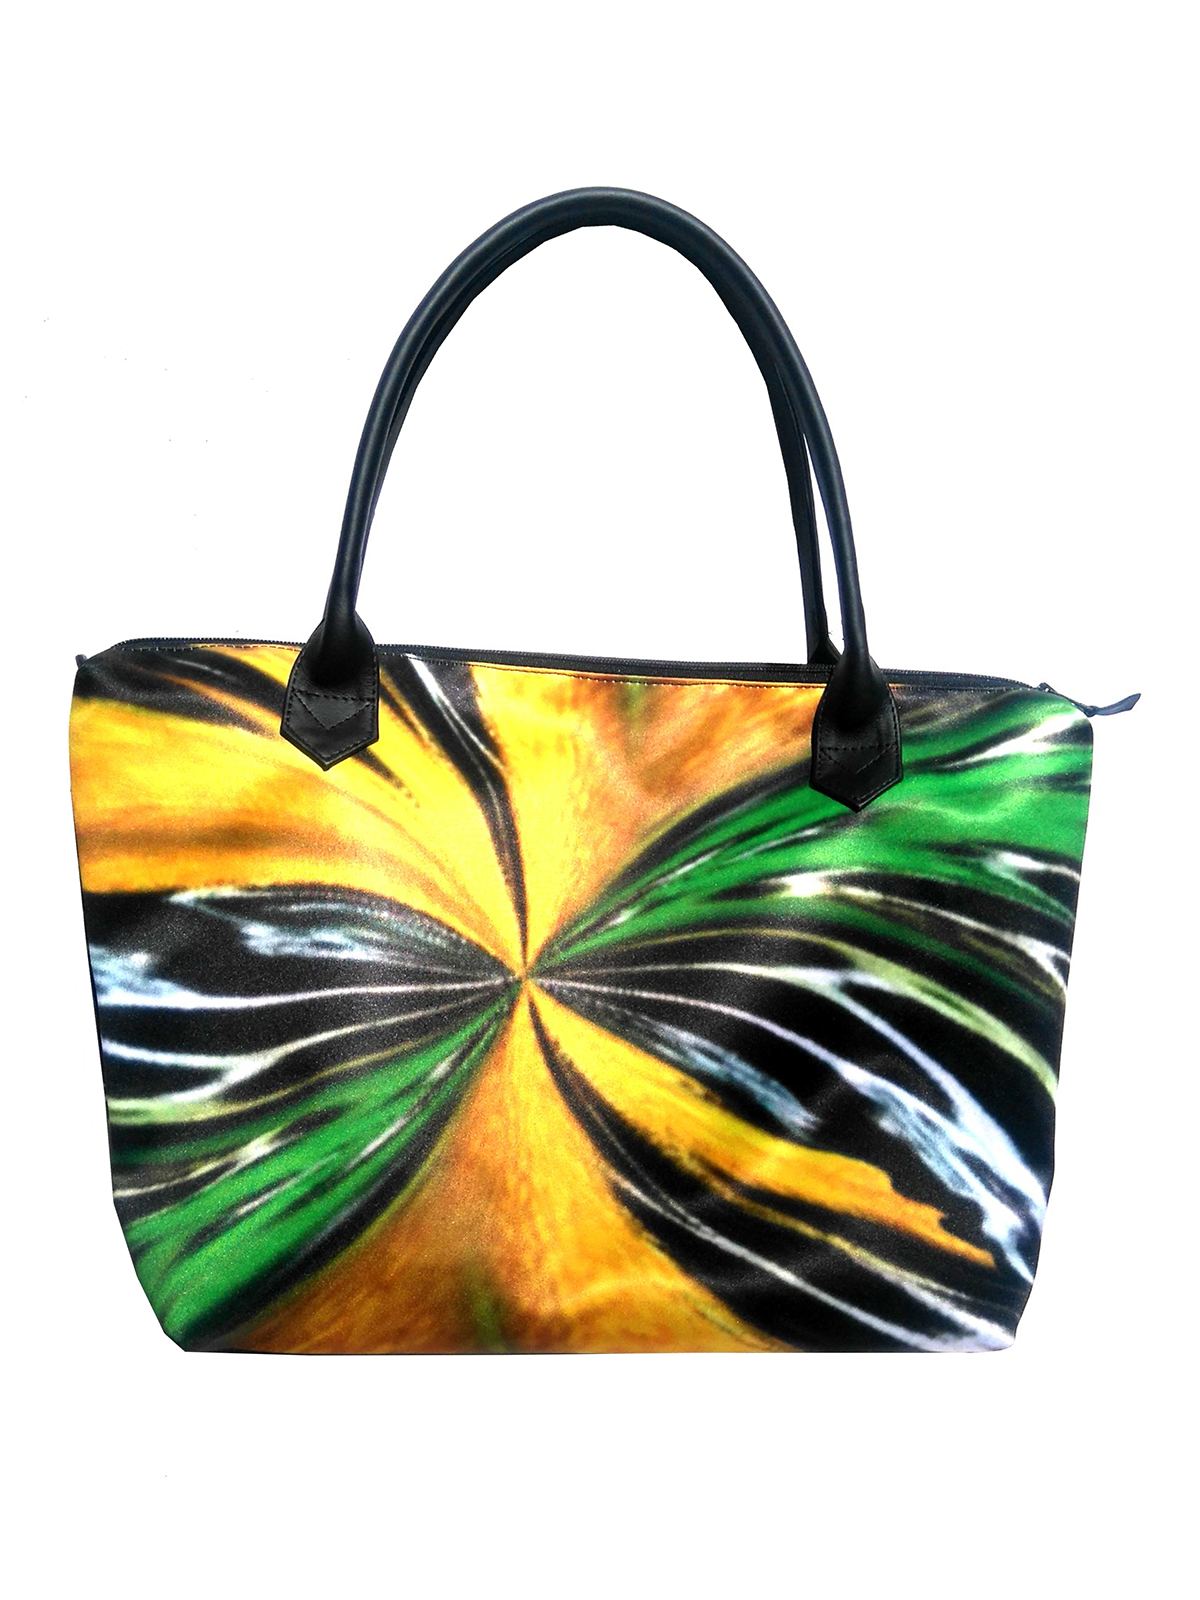 Shop Maria Enrica Nardi Artemide Satin Bag In Multicolour